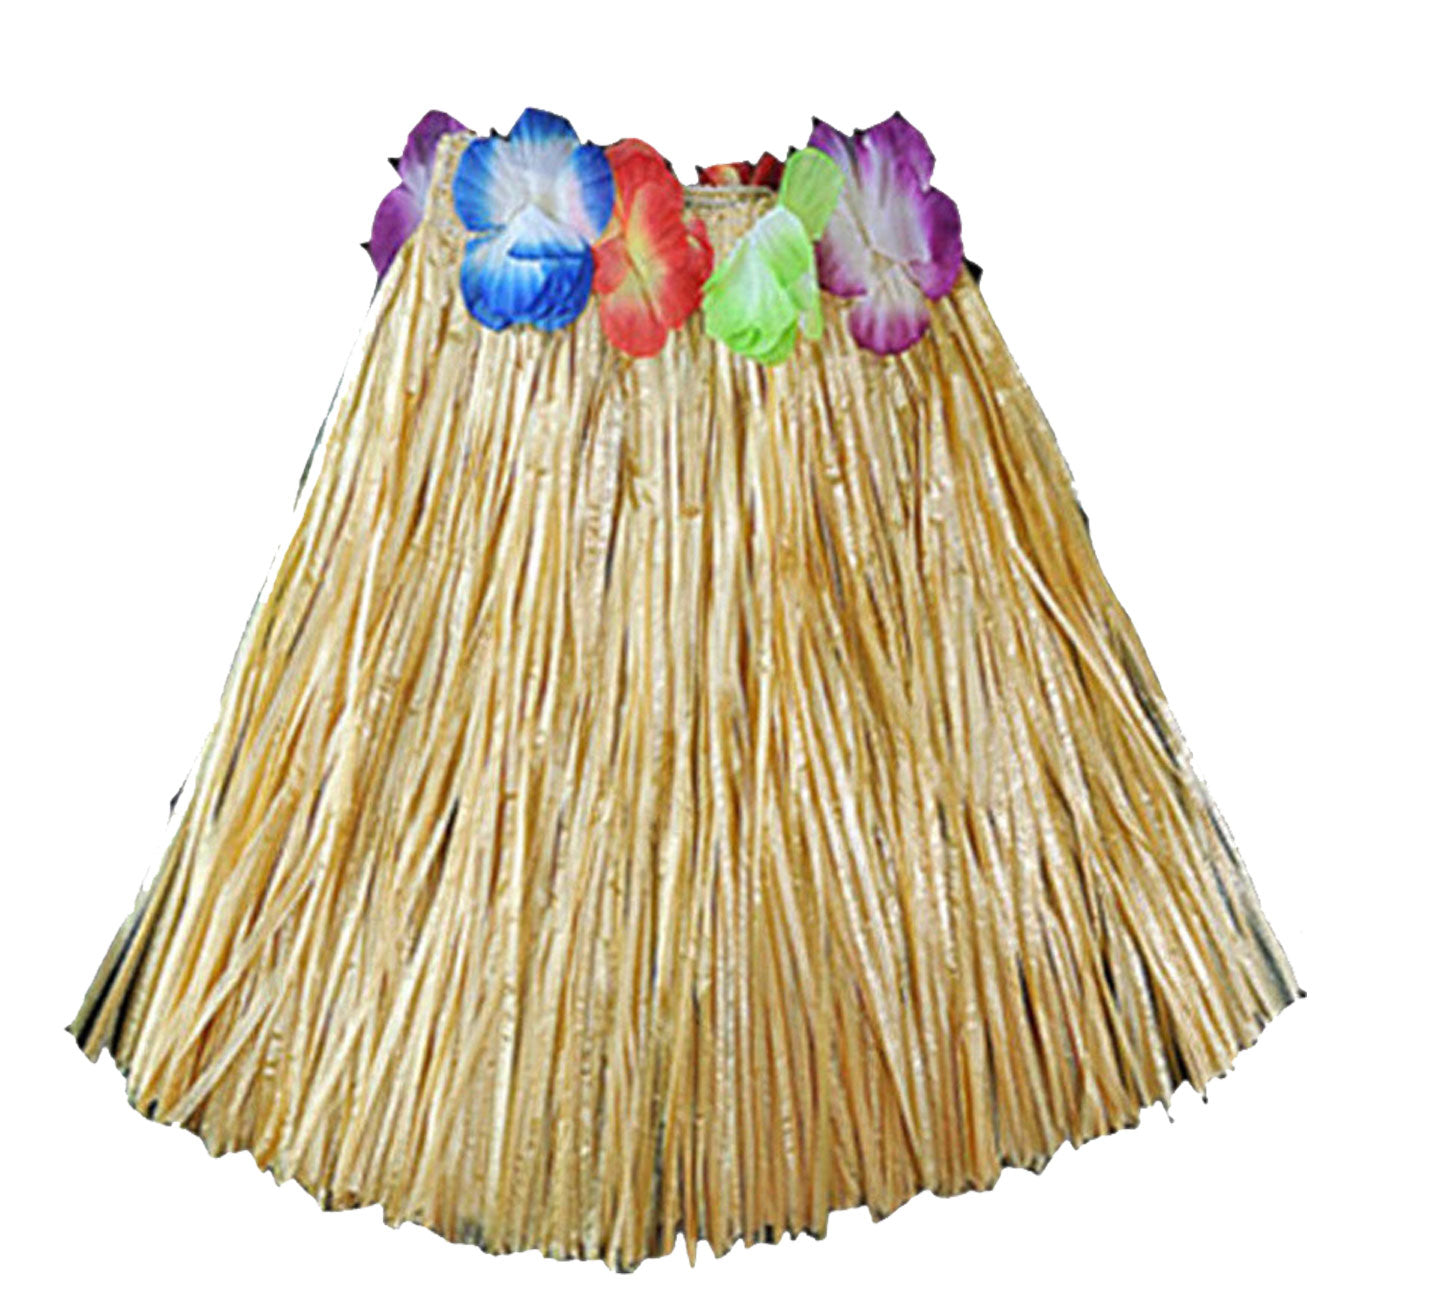 Hula Grass Skirt Plastic Brown Coconut Bra Ladies Girls Hawaiian Hula Beach Party Fancy Dress Costume